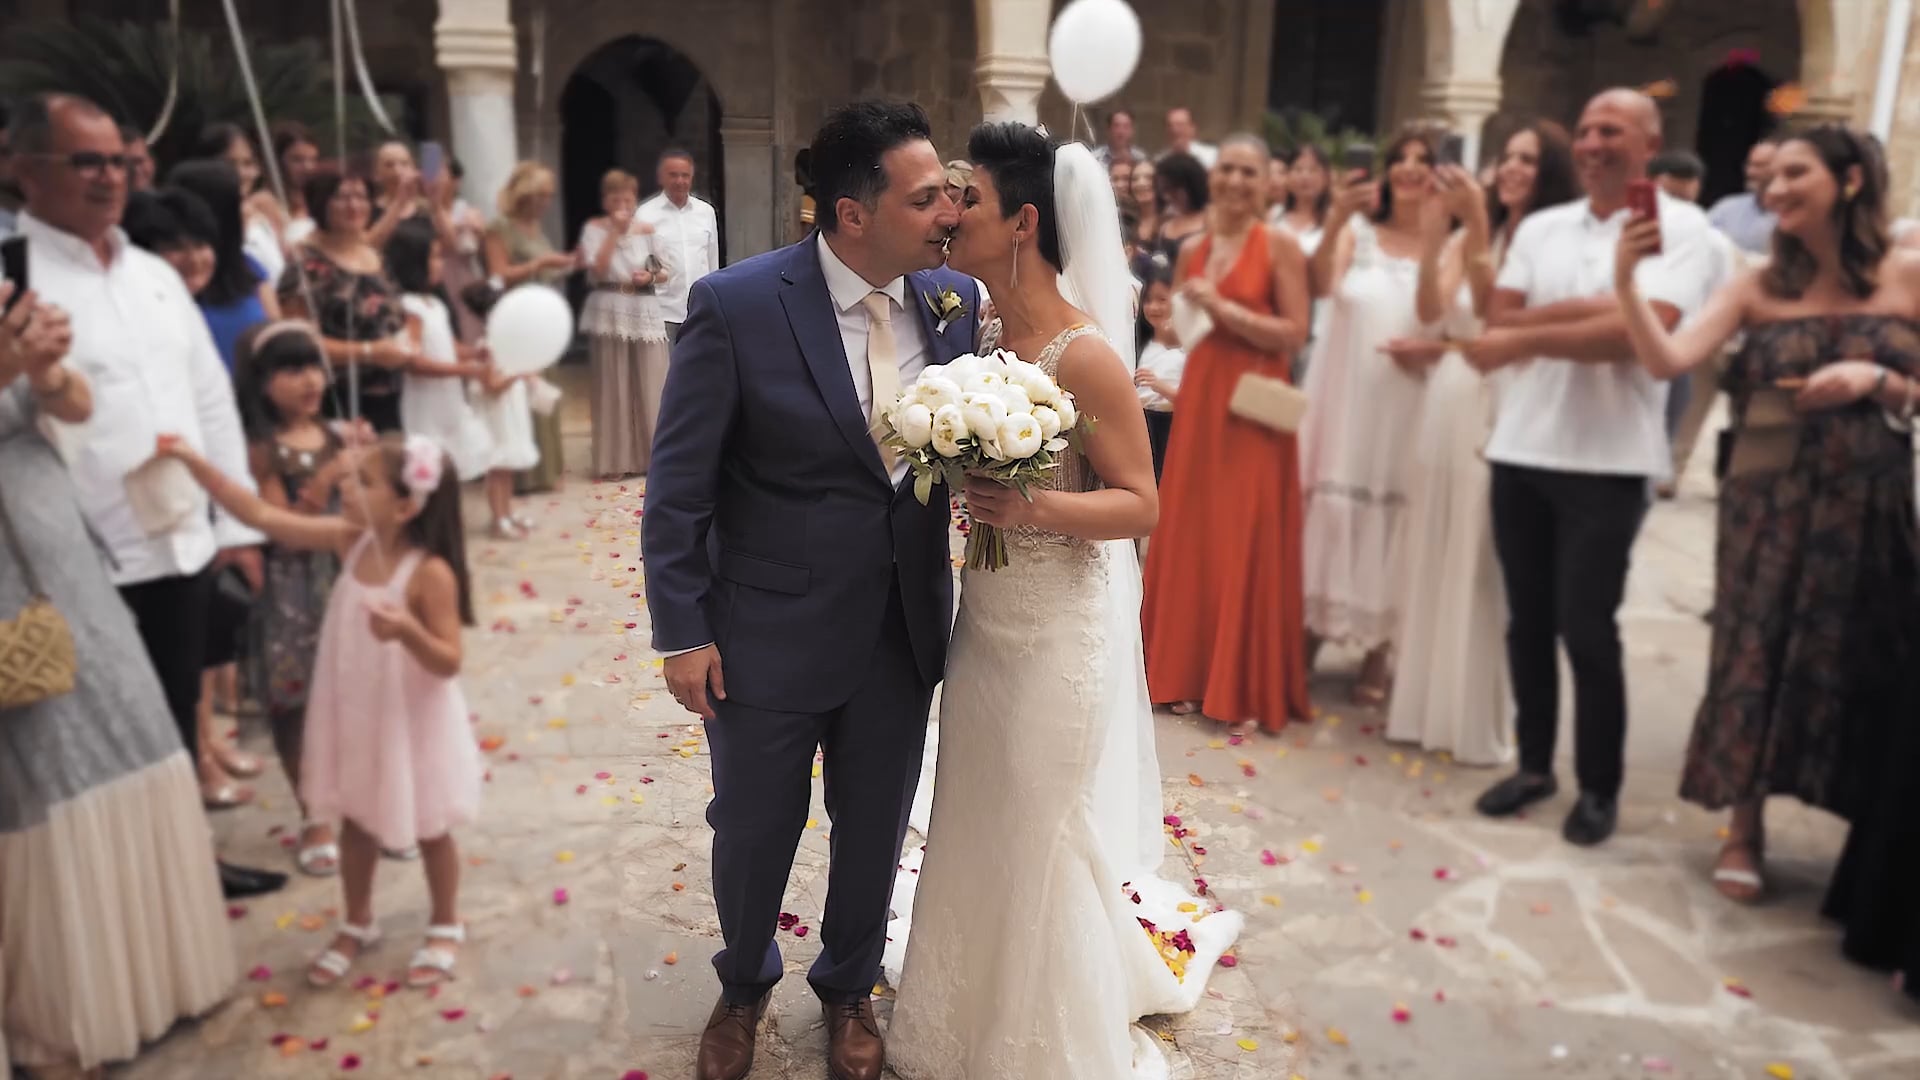 Yiannis & Xristiana Wedding Teaser